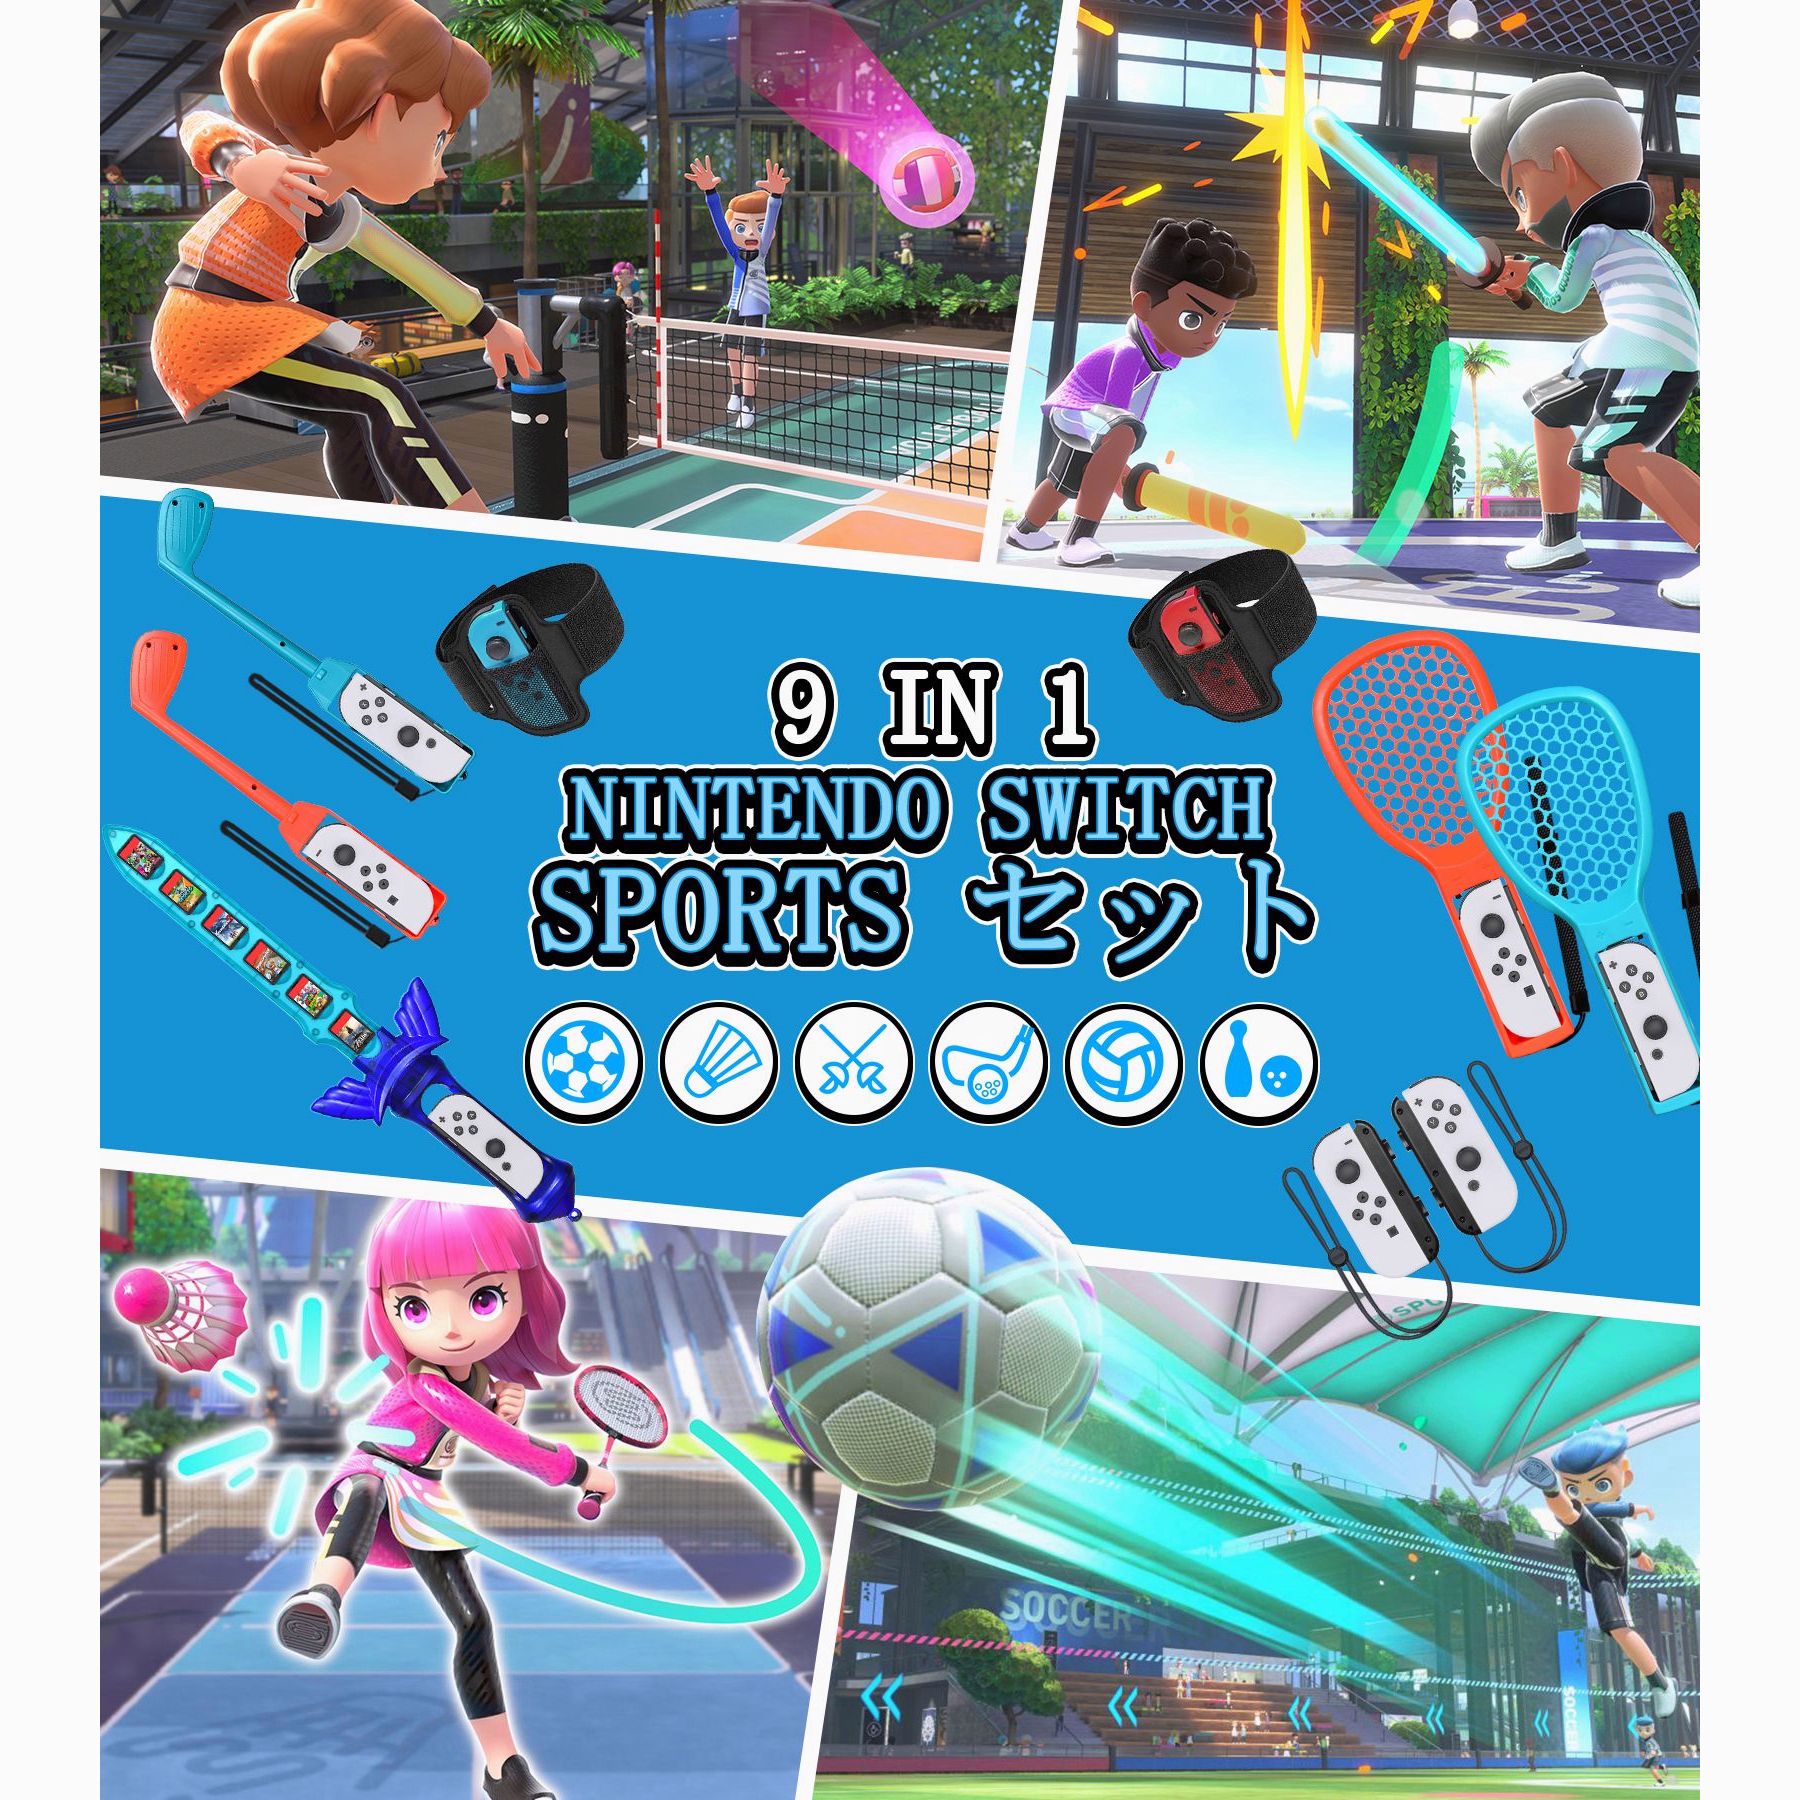 Switch Sports スイッチ スポーツ セット ゲーム用 アクセサリーセット